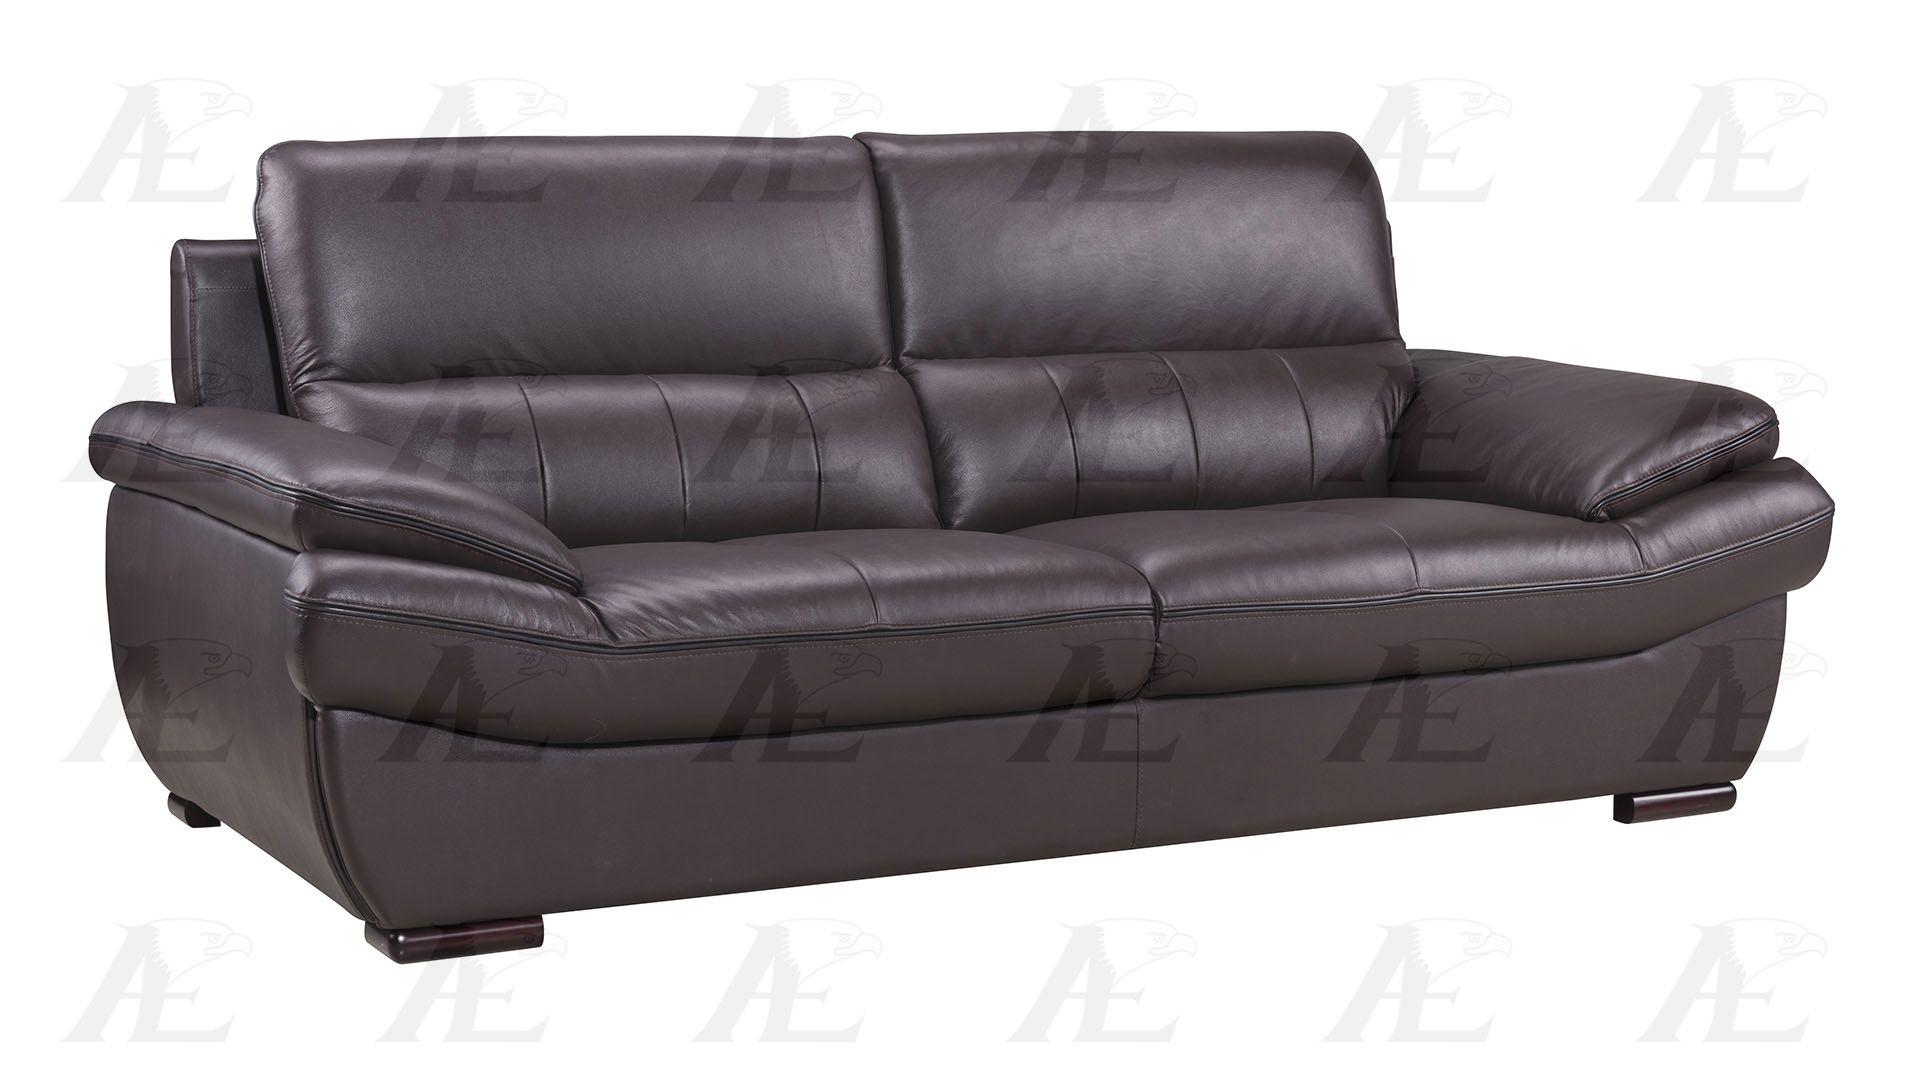 

    
American Eagle EK-B305 Dark Chocolate Genuine Leather Living Room Sofa Set 2pcs in Contemporary Style
